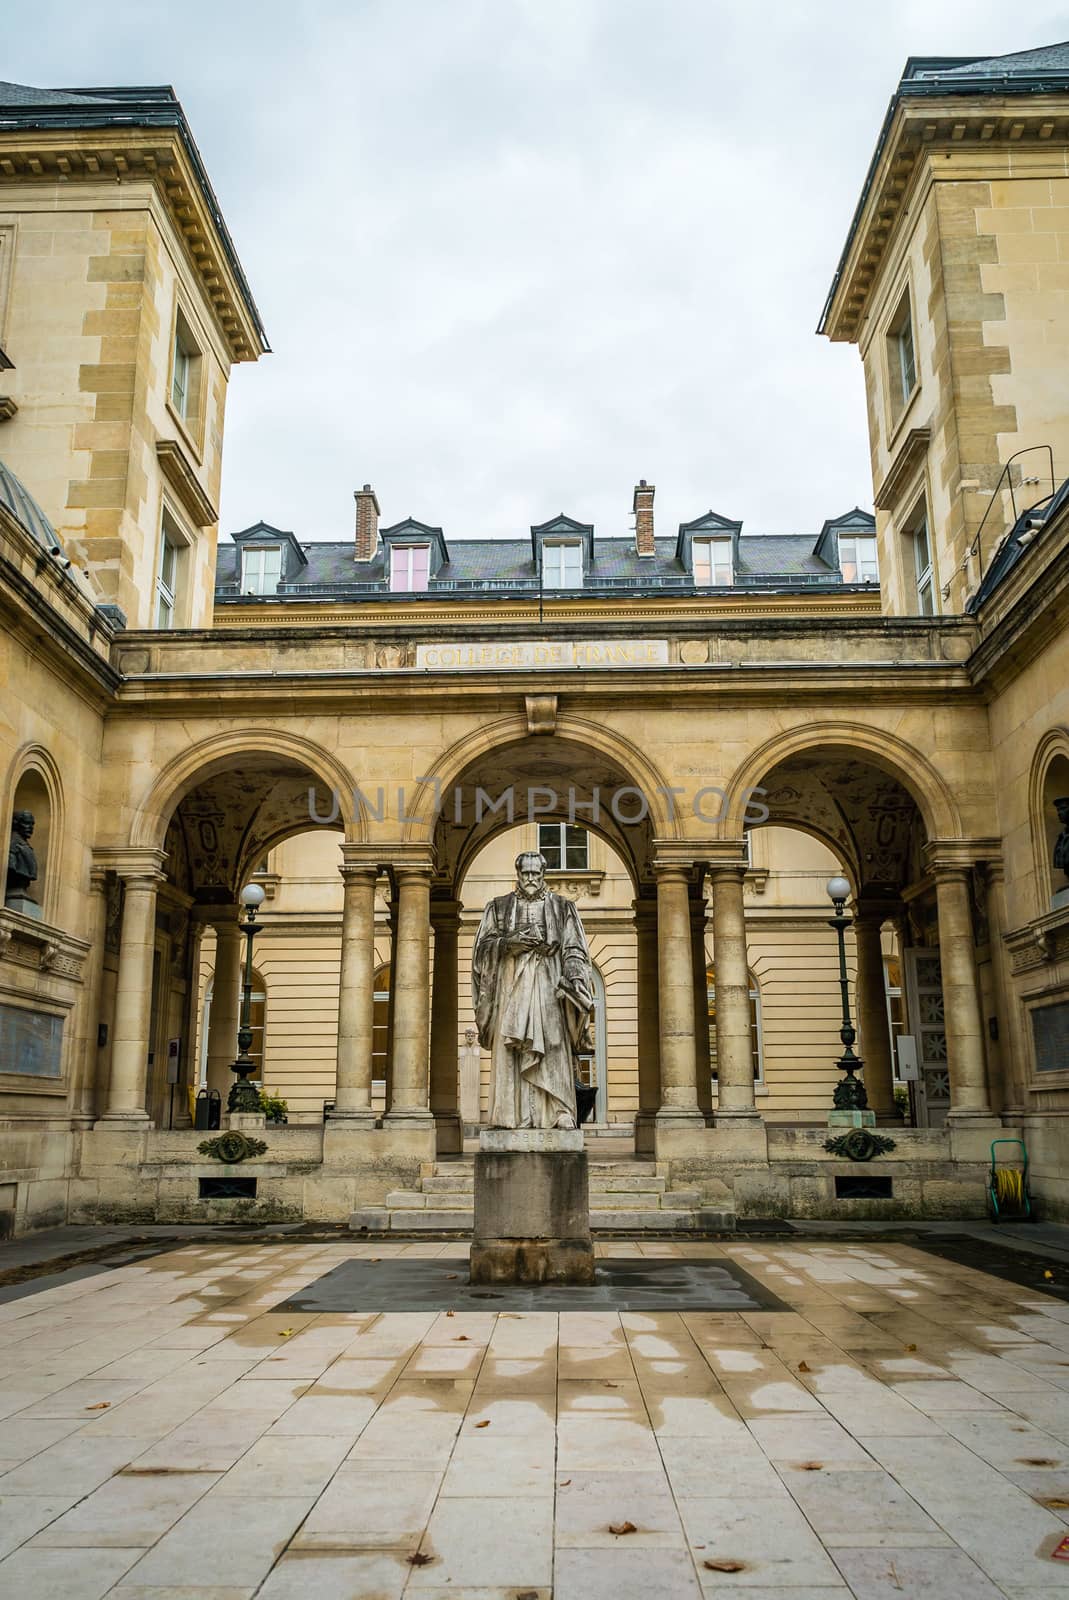 College de France hall statue in Paris